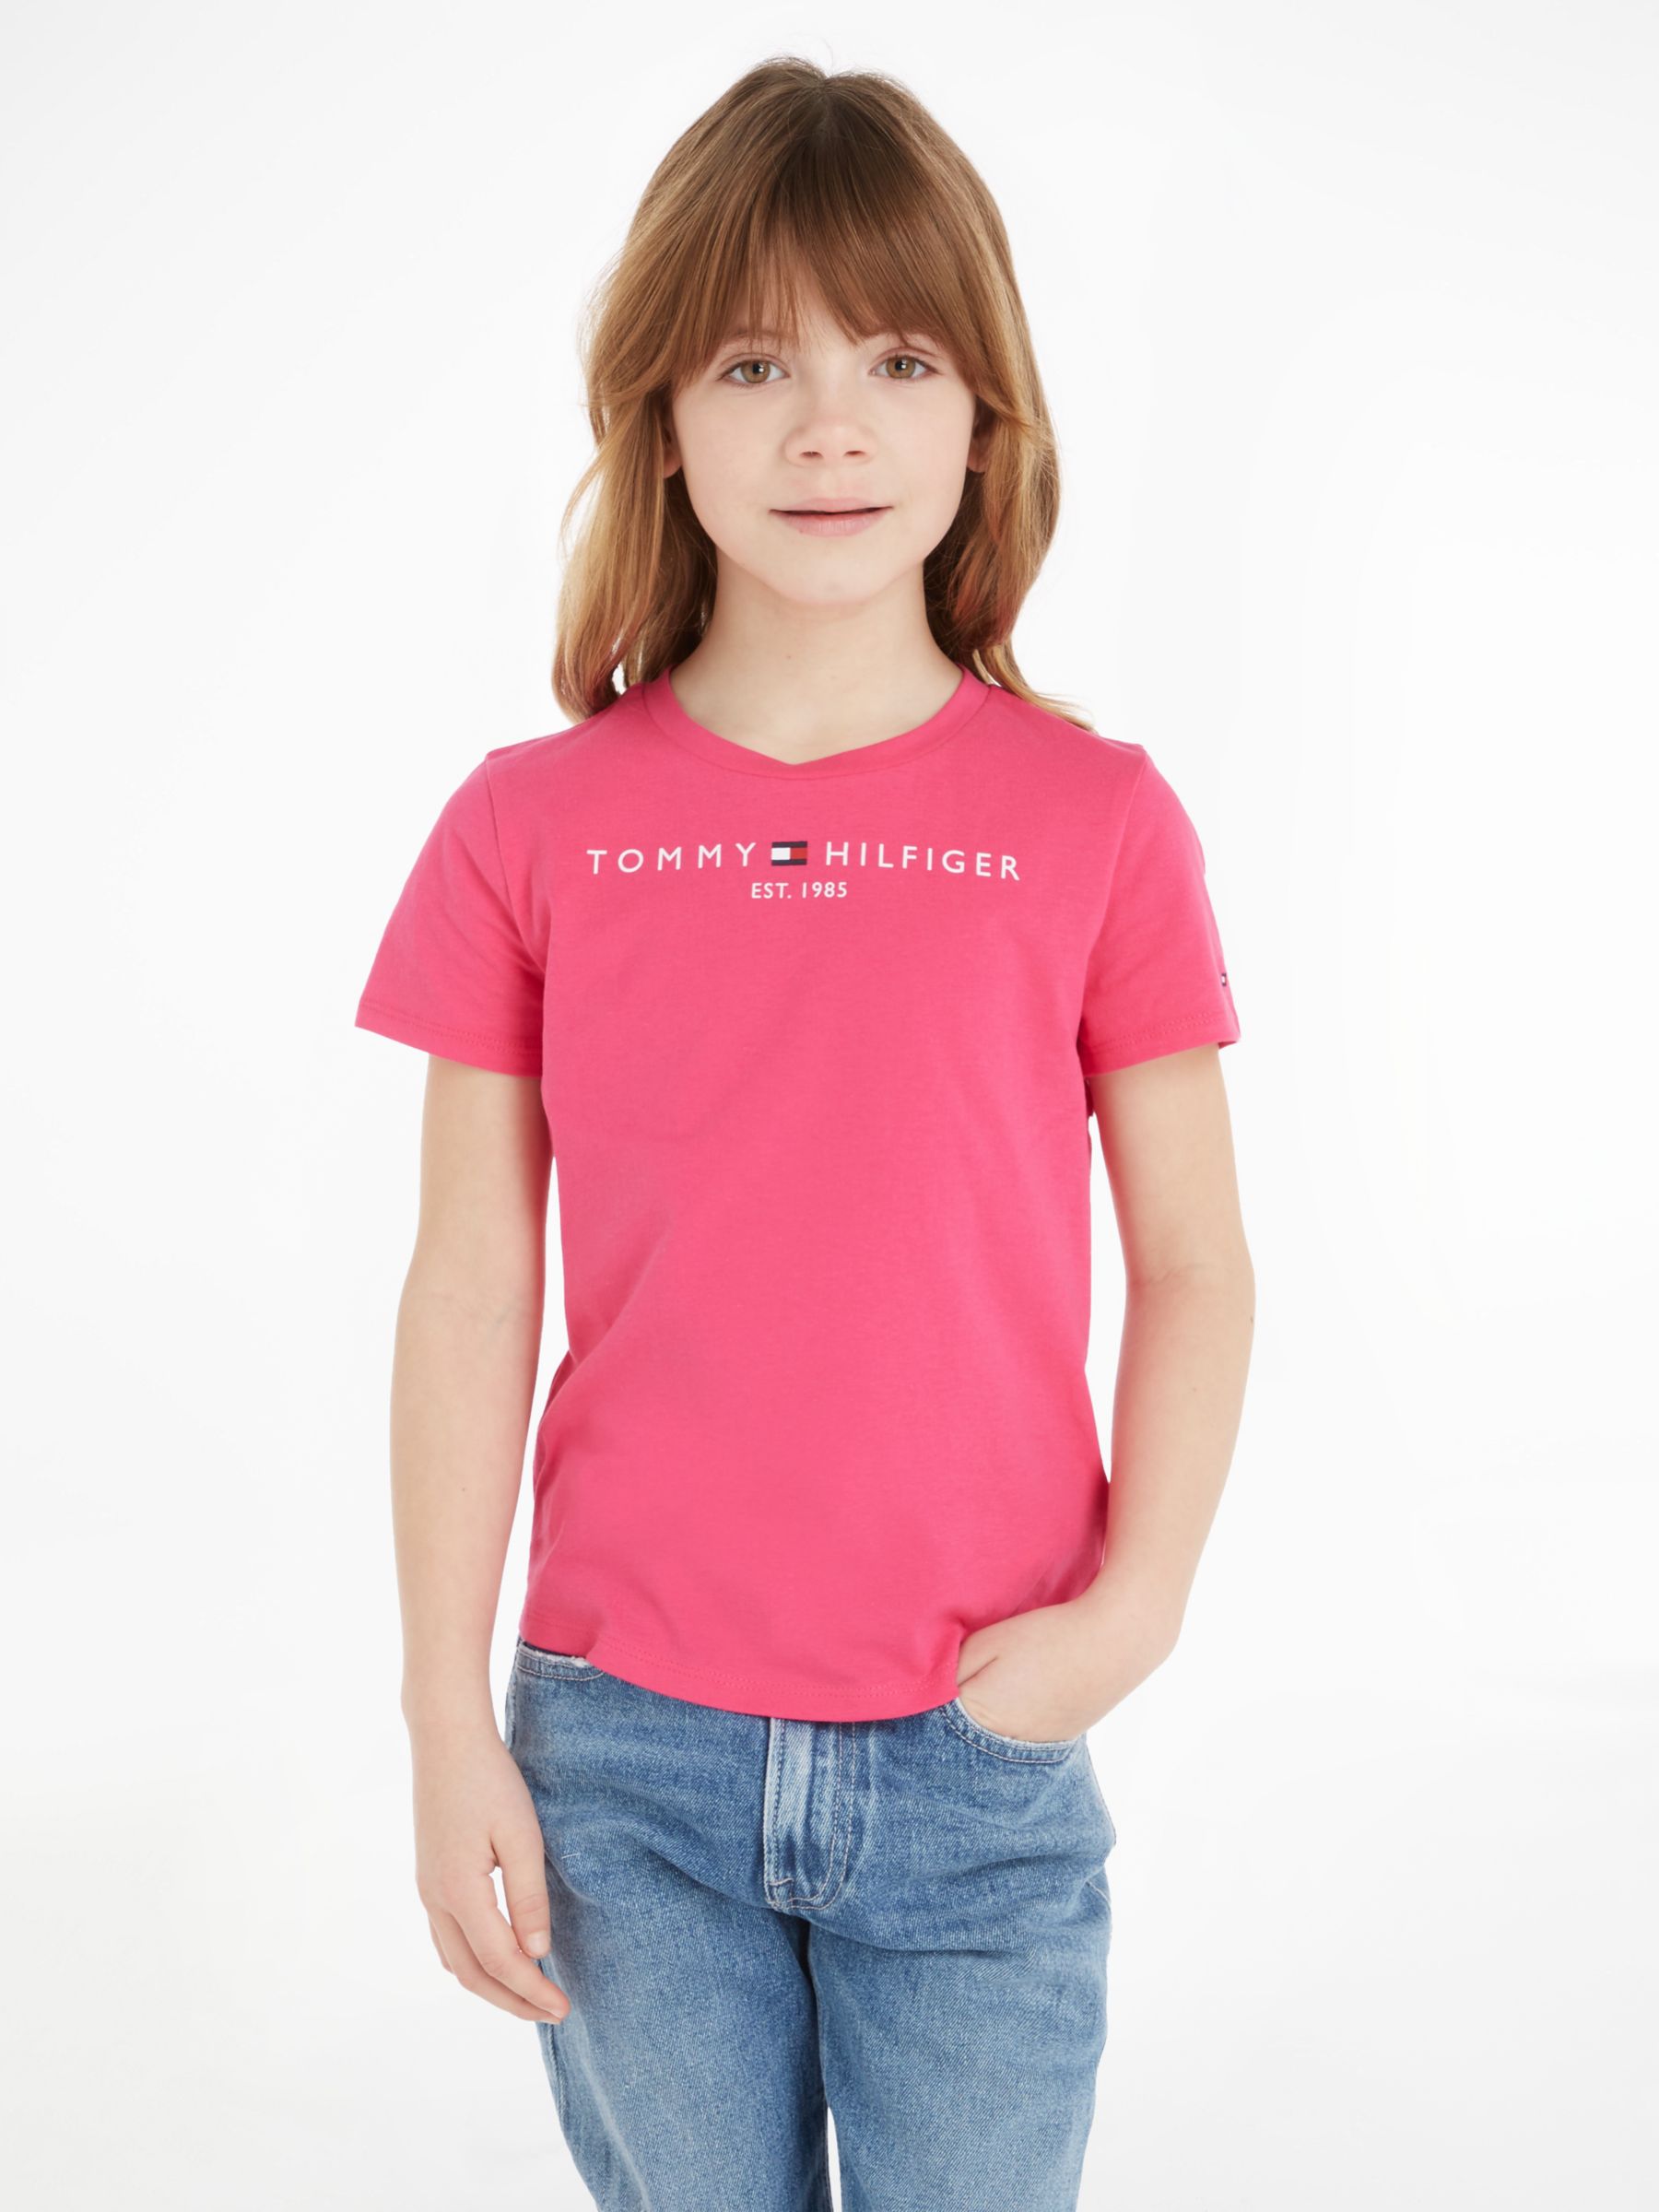 Tommy Hilfiger Kids' Essential Short Sleeve T-Shirt, Hot Magenta at John  Lewis & Partners